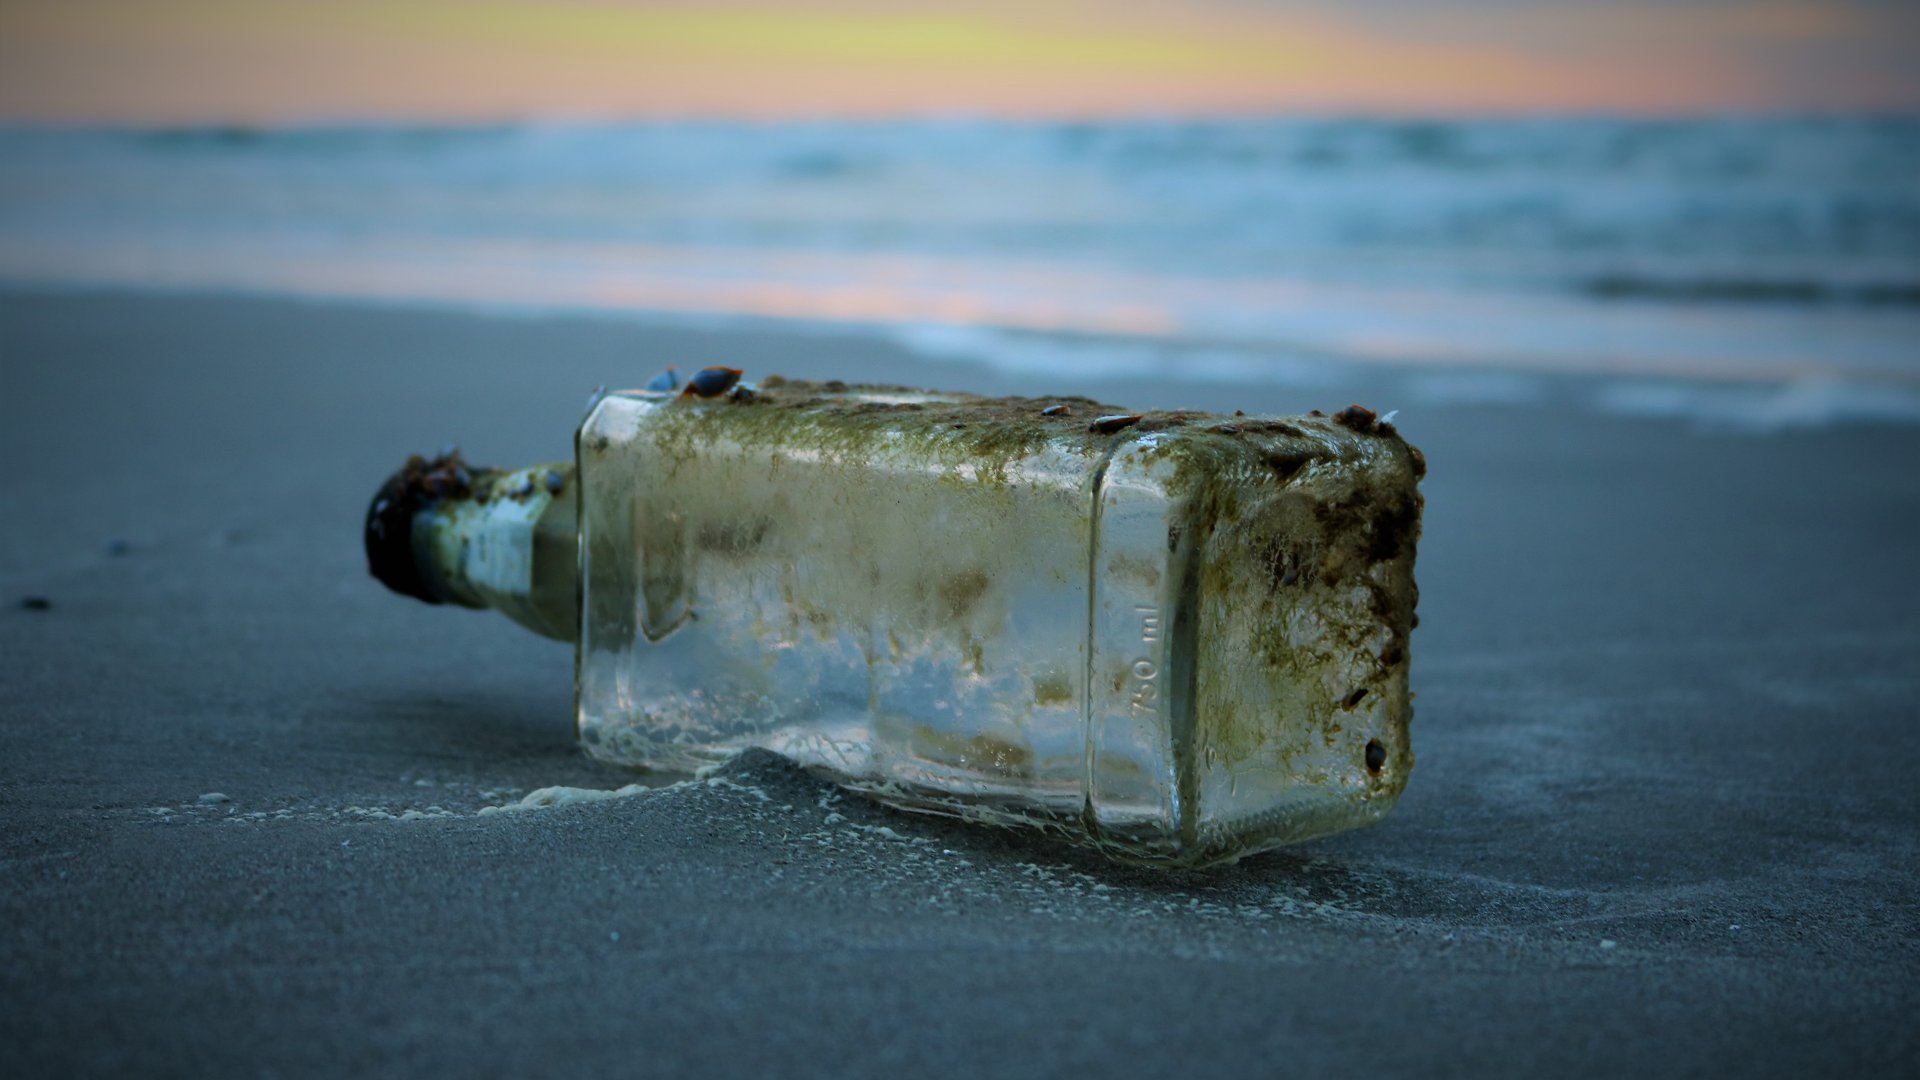 Üveg a tengerparti homokban